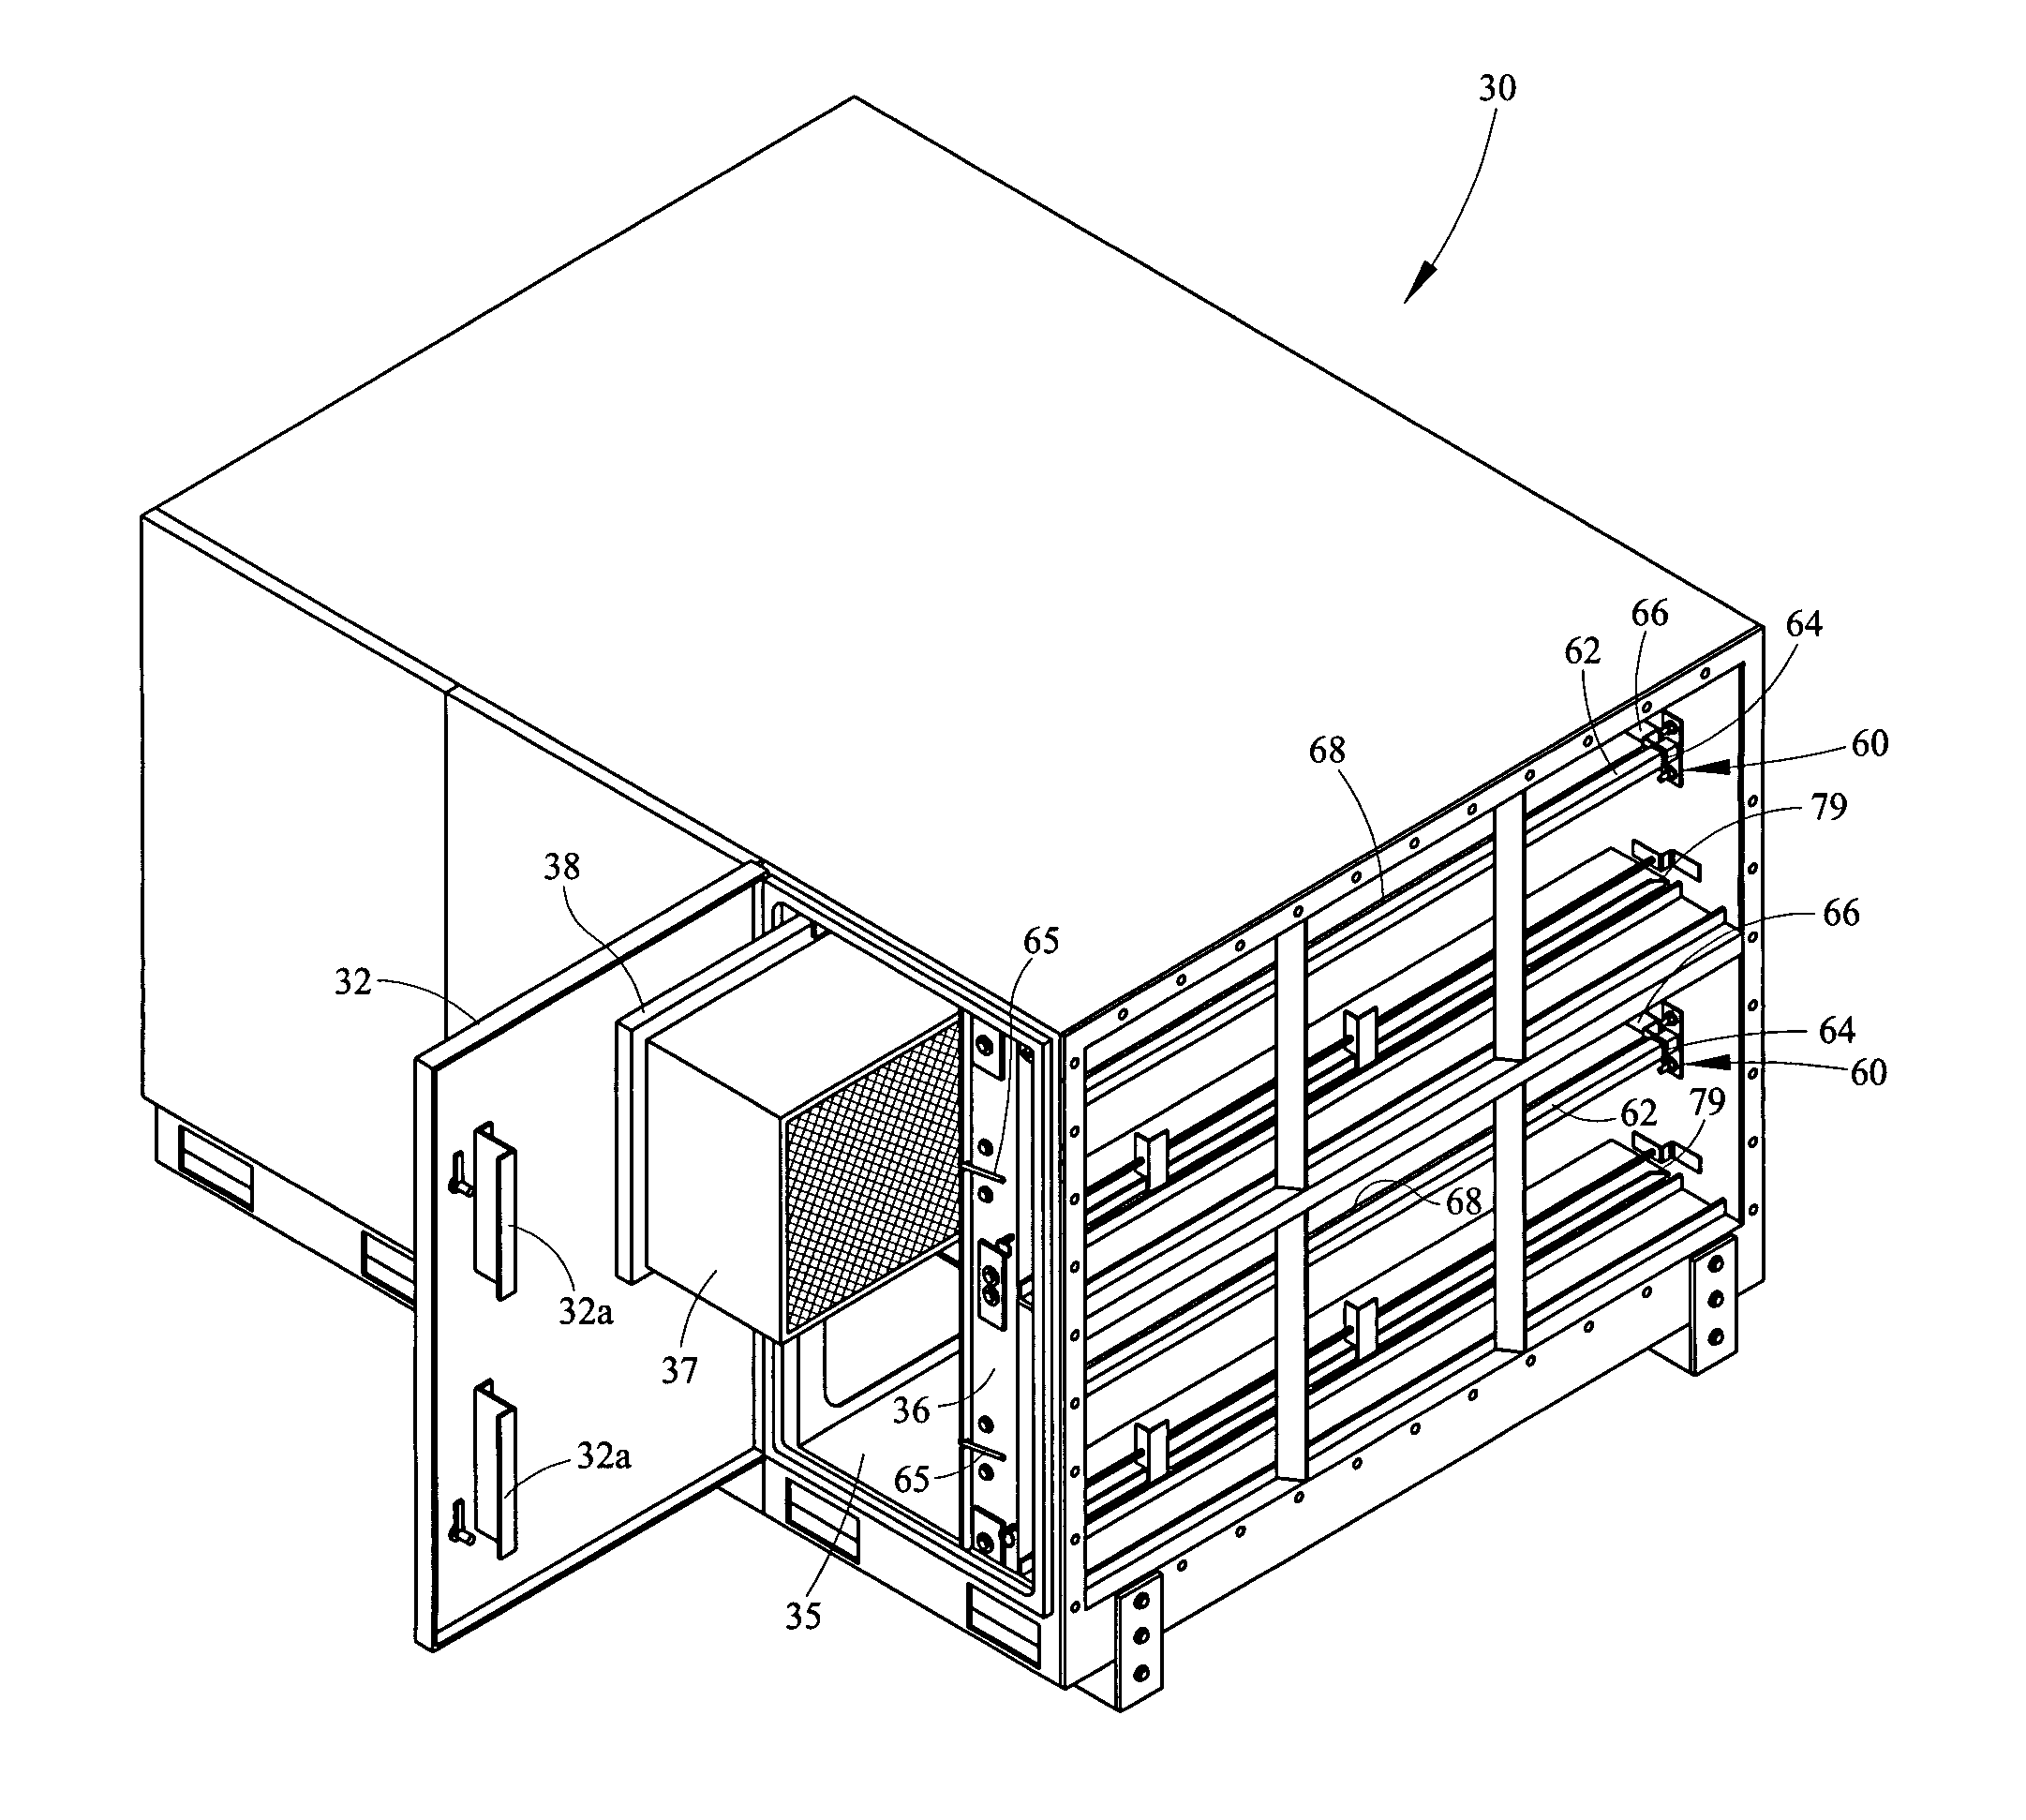 Multi-stage filtering apparatus